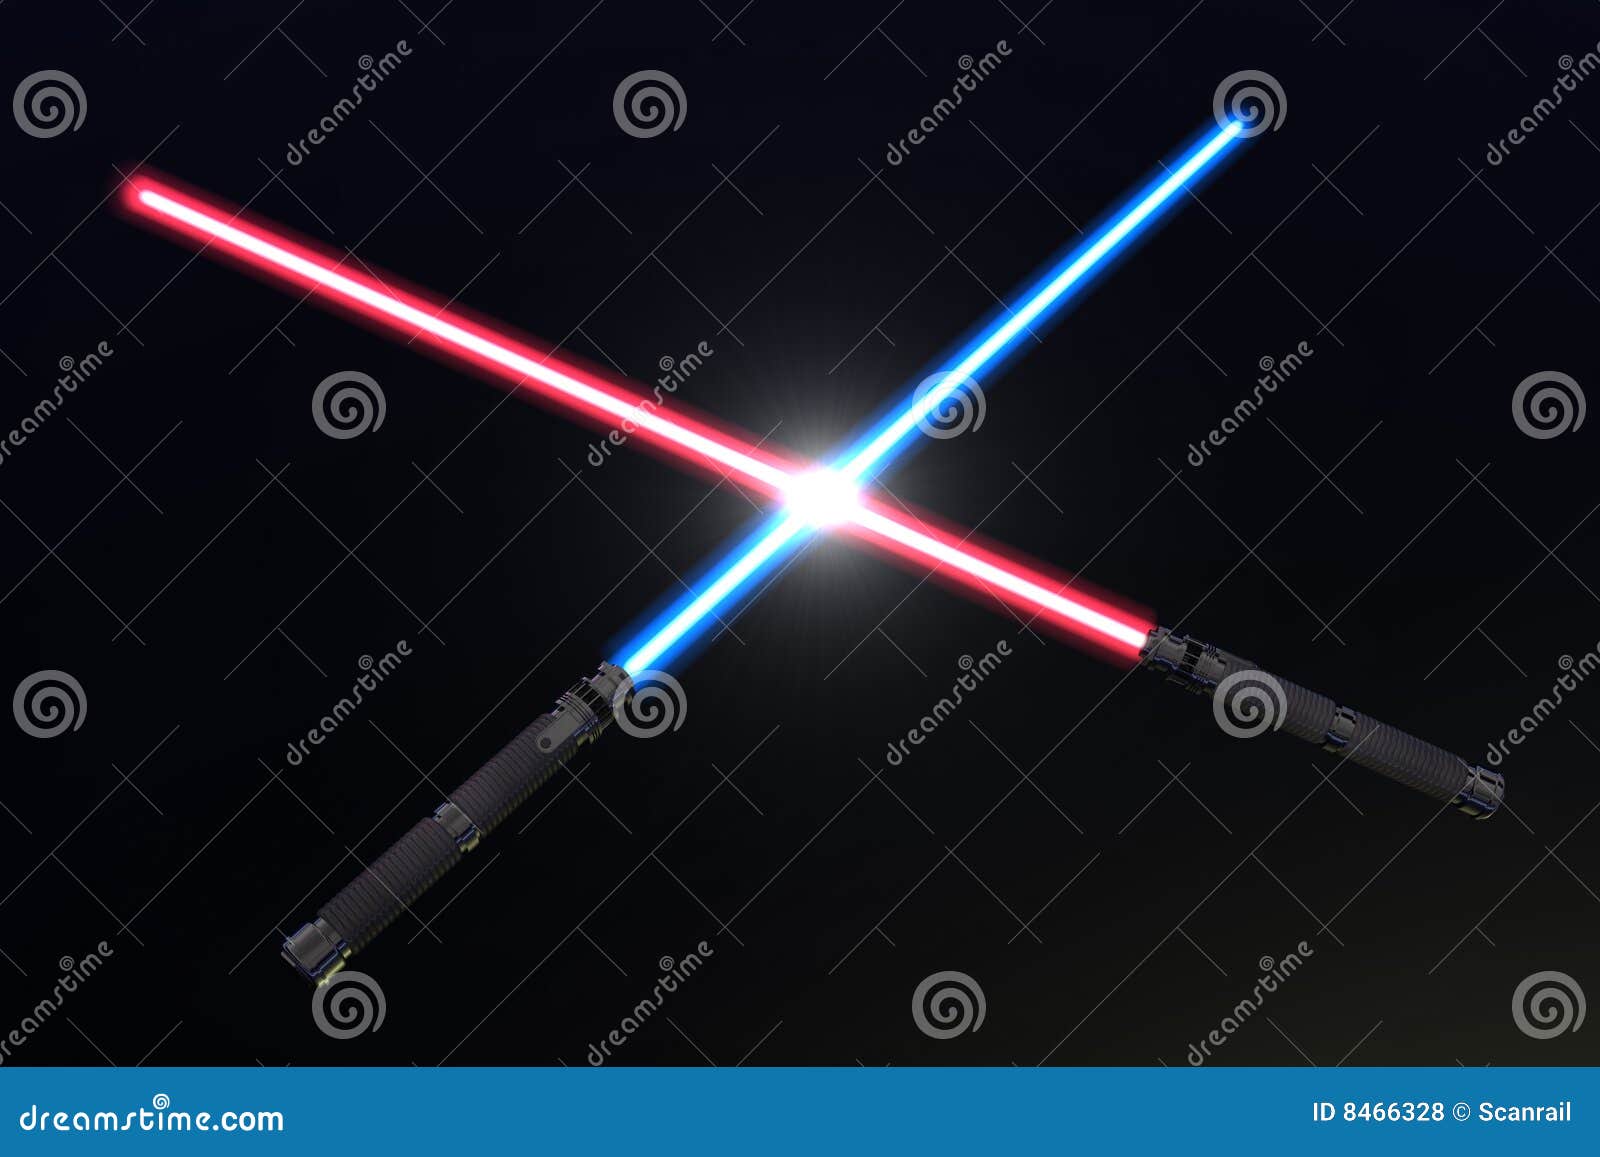 crossed light sabers